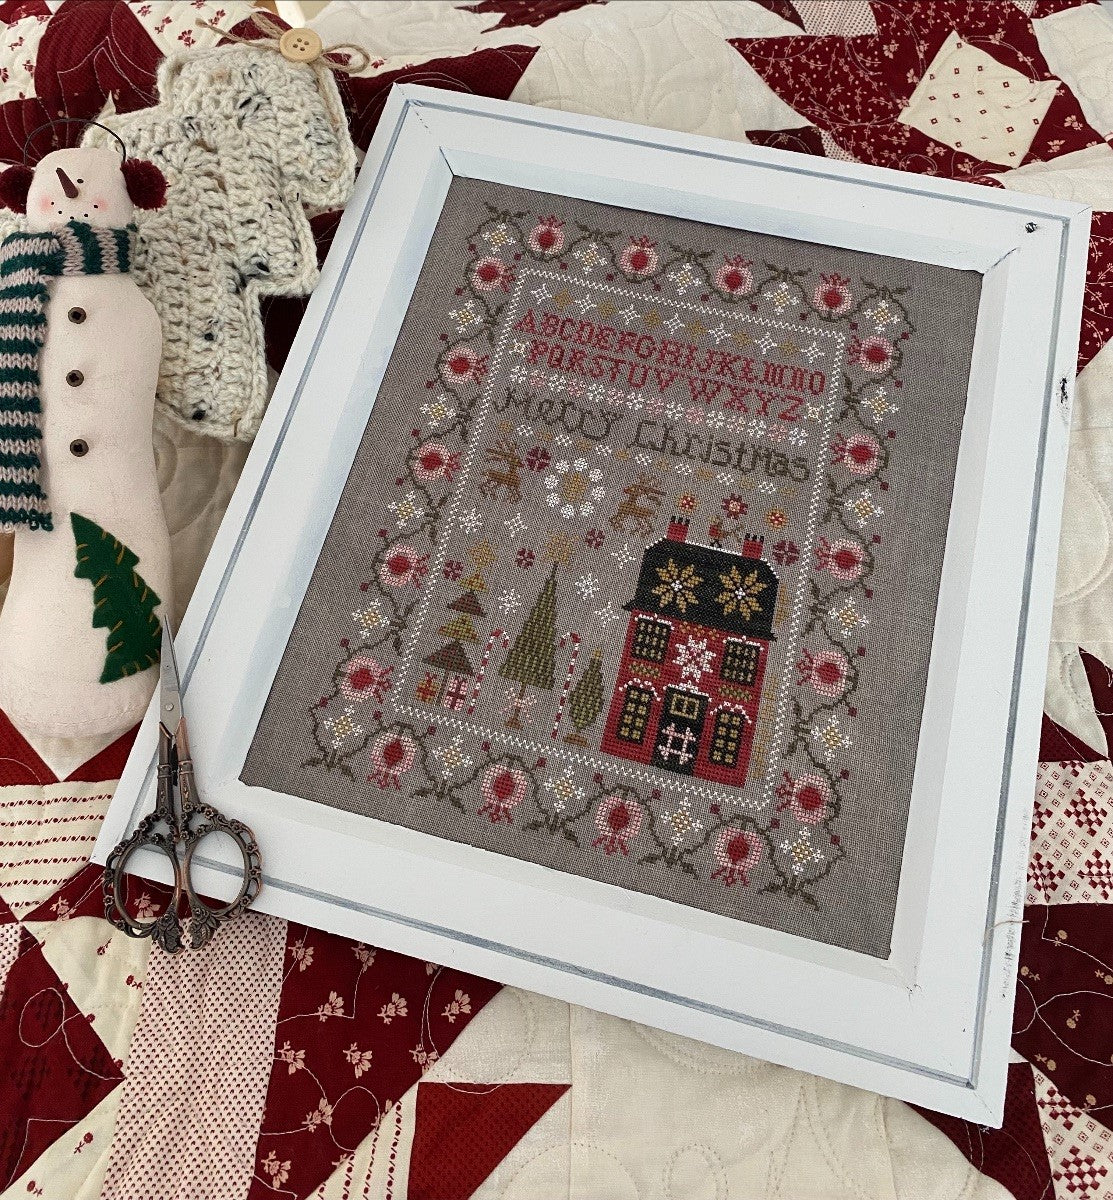 Merry Christmas Sampler - Cross stitch pattern by Pansy Patch